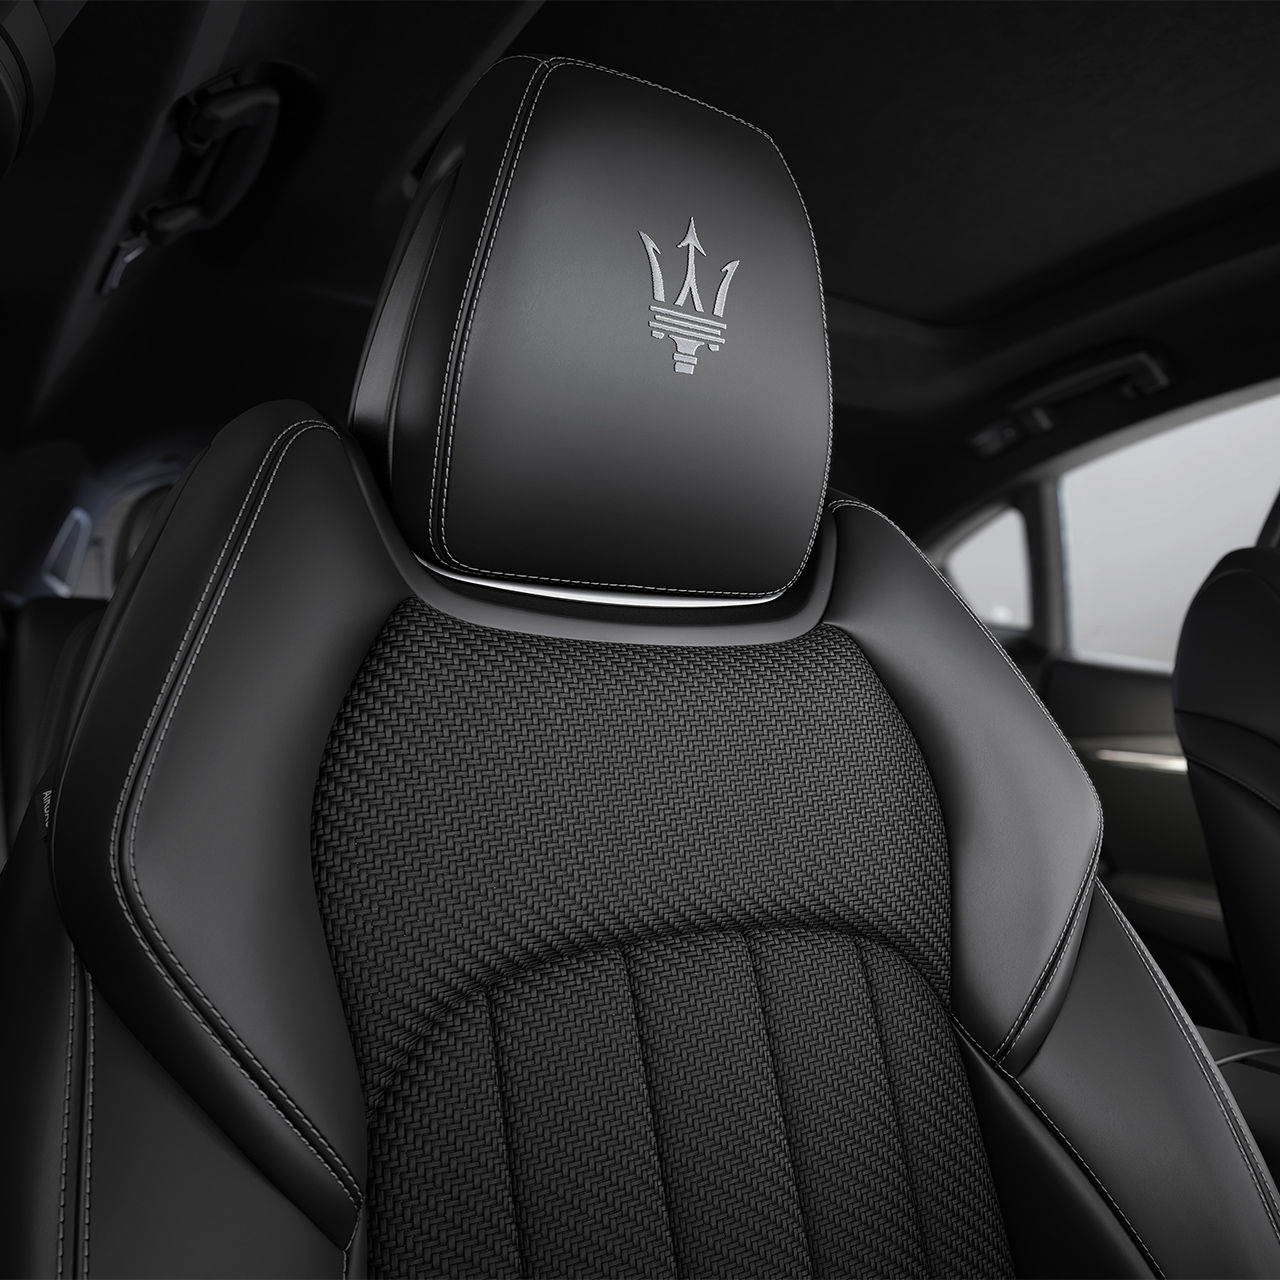 Interior seat of Maserati vehicle with trident logo